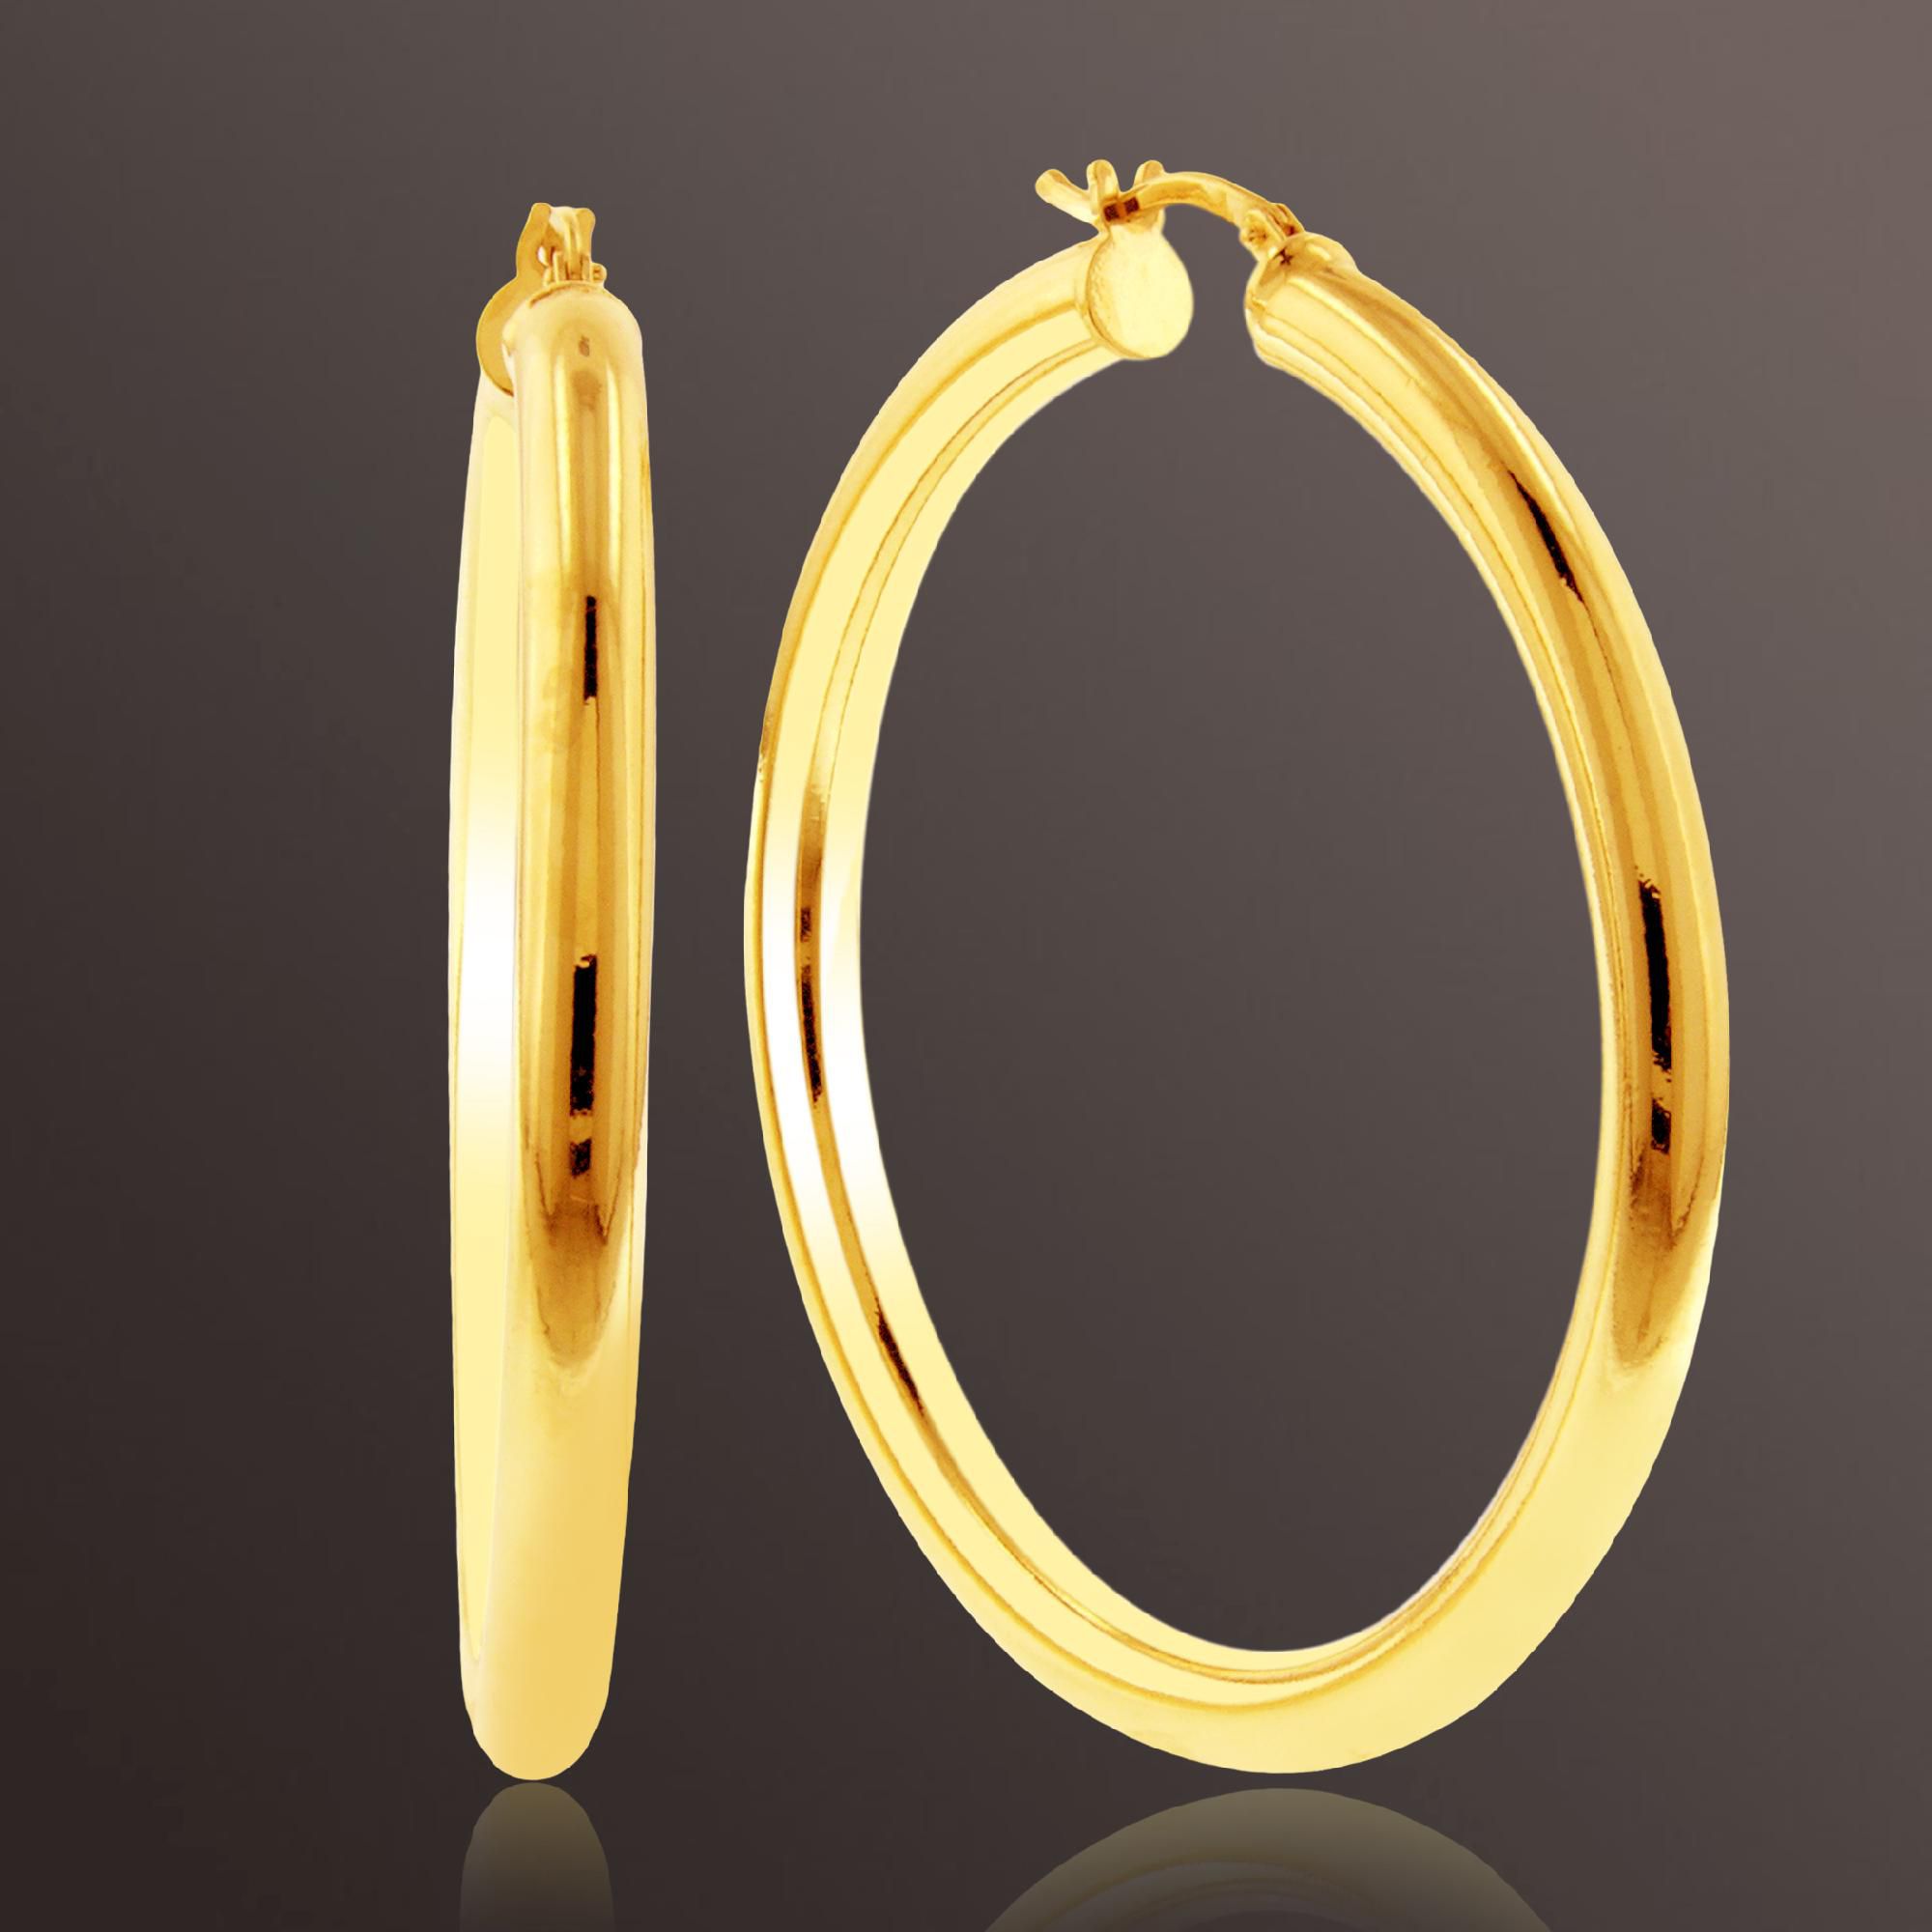 Romanza Medium Tube Hoop Earrings set in Gold over Bronze